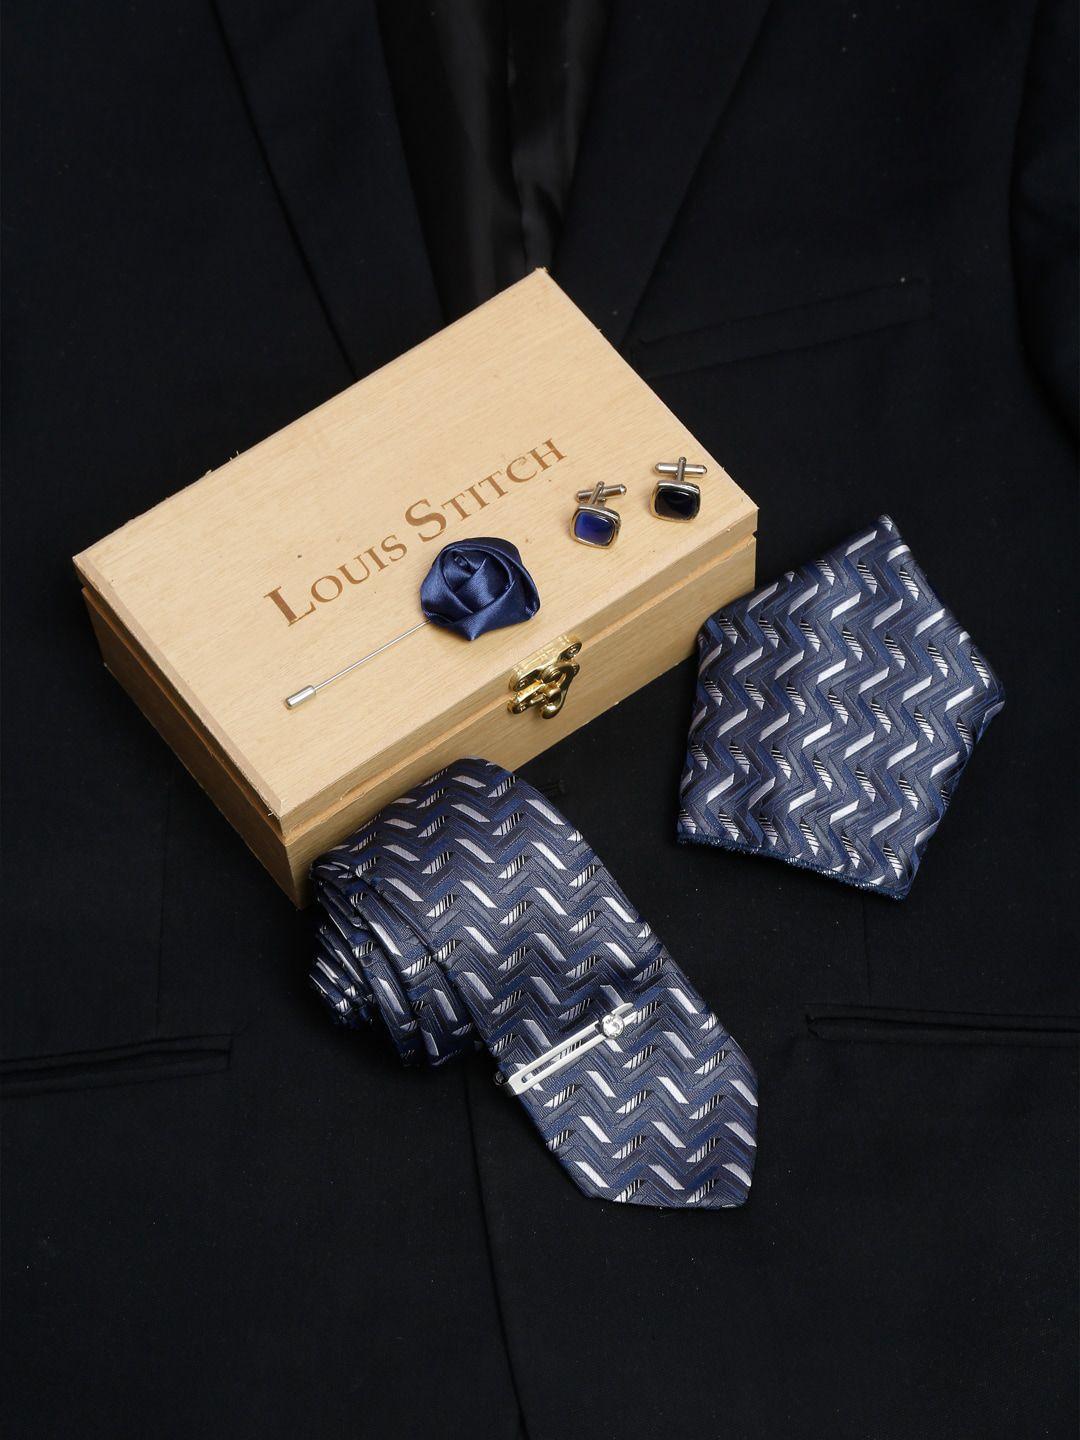 louis stitch men printed italian silk accessory gift set